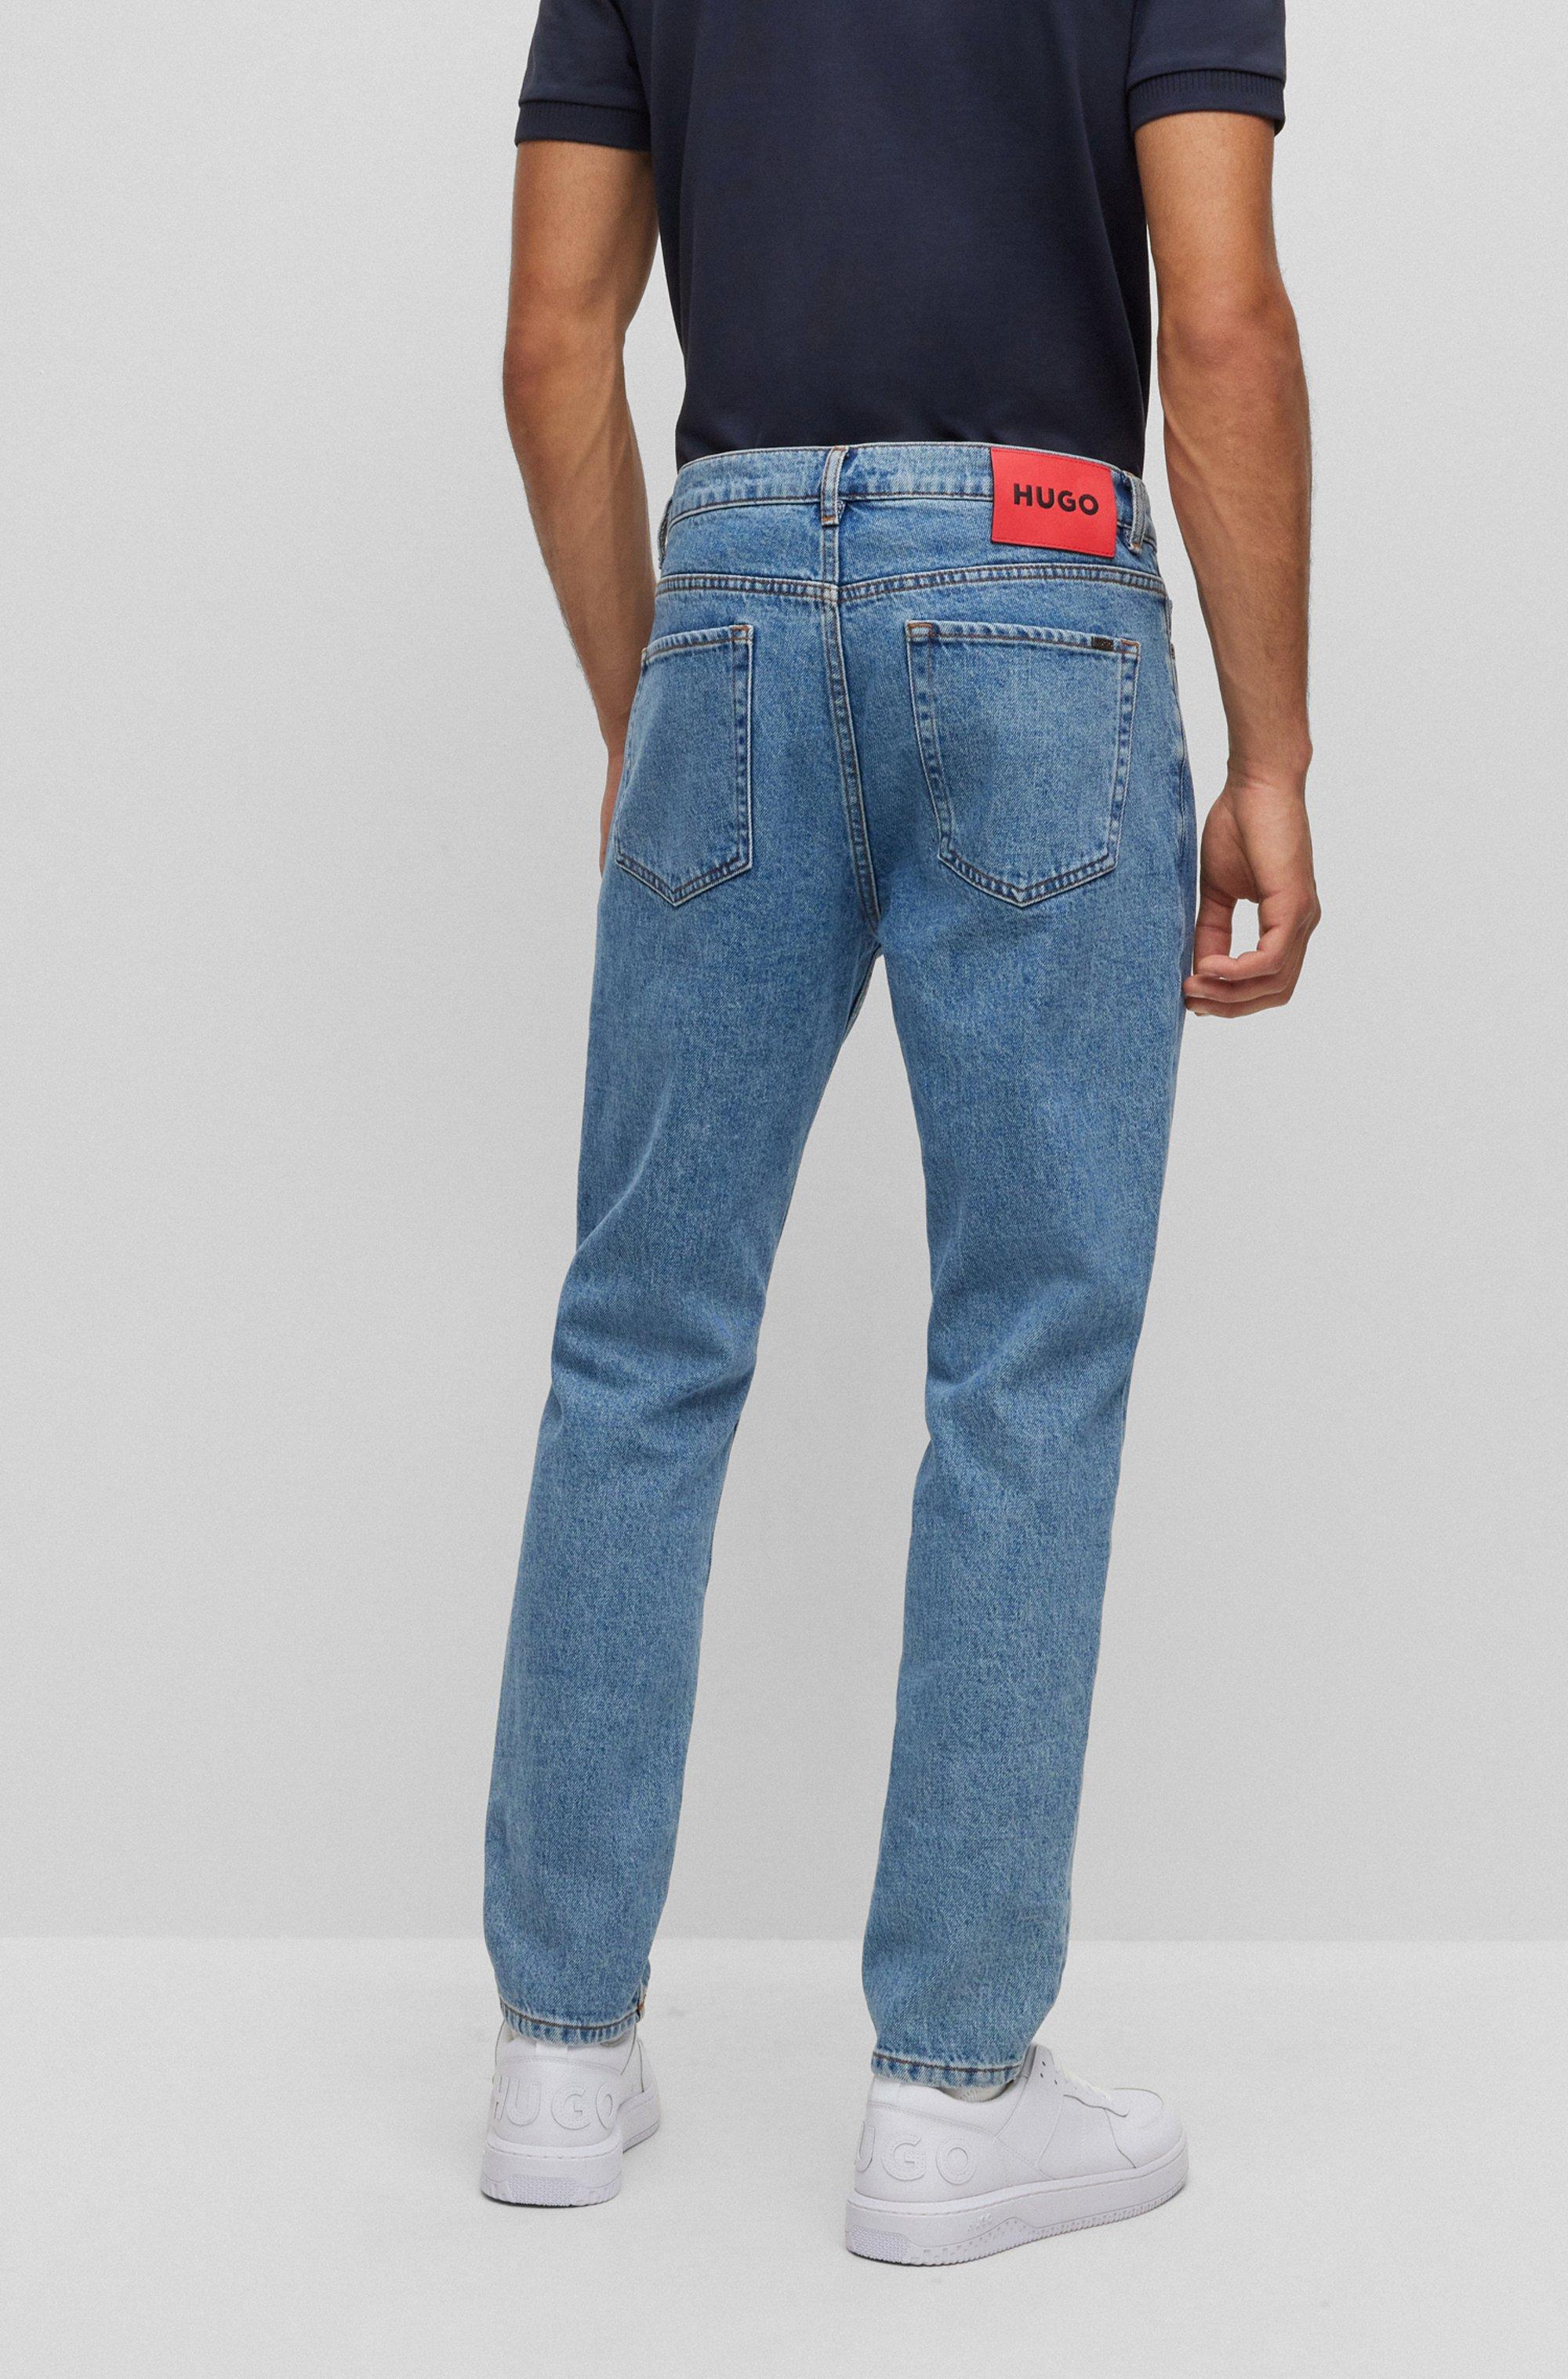 HUGO Tapered-fit Jeans In Blue Comfort-stretch Denim for Men | Lyst